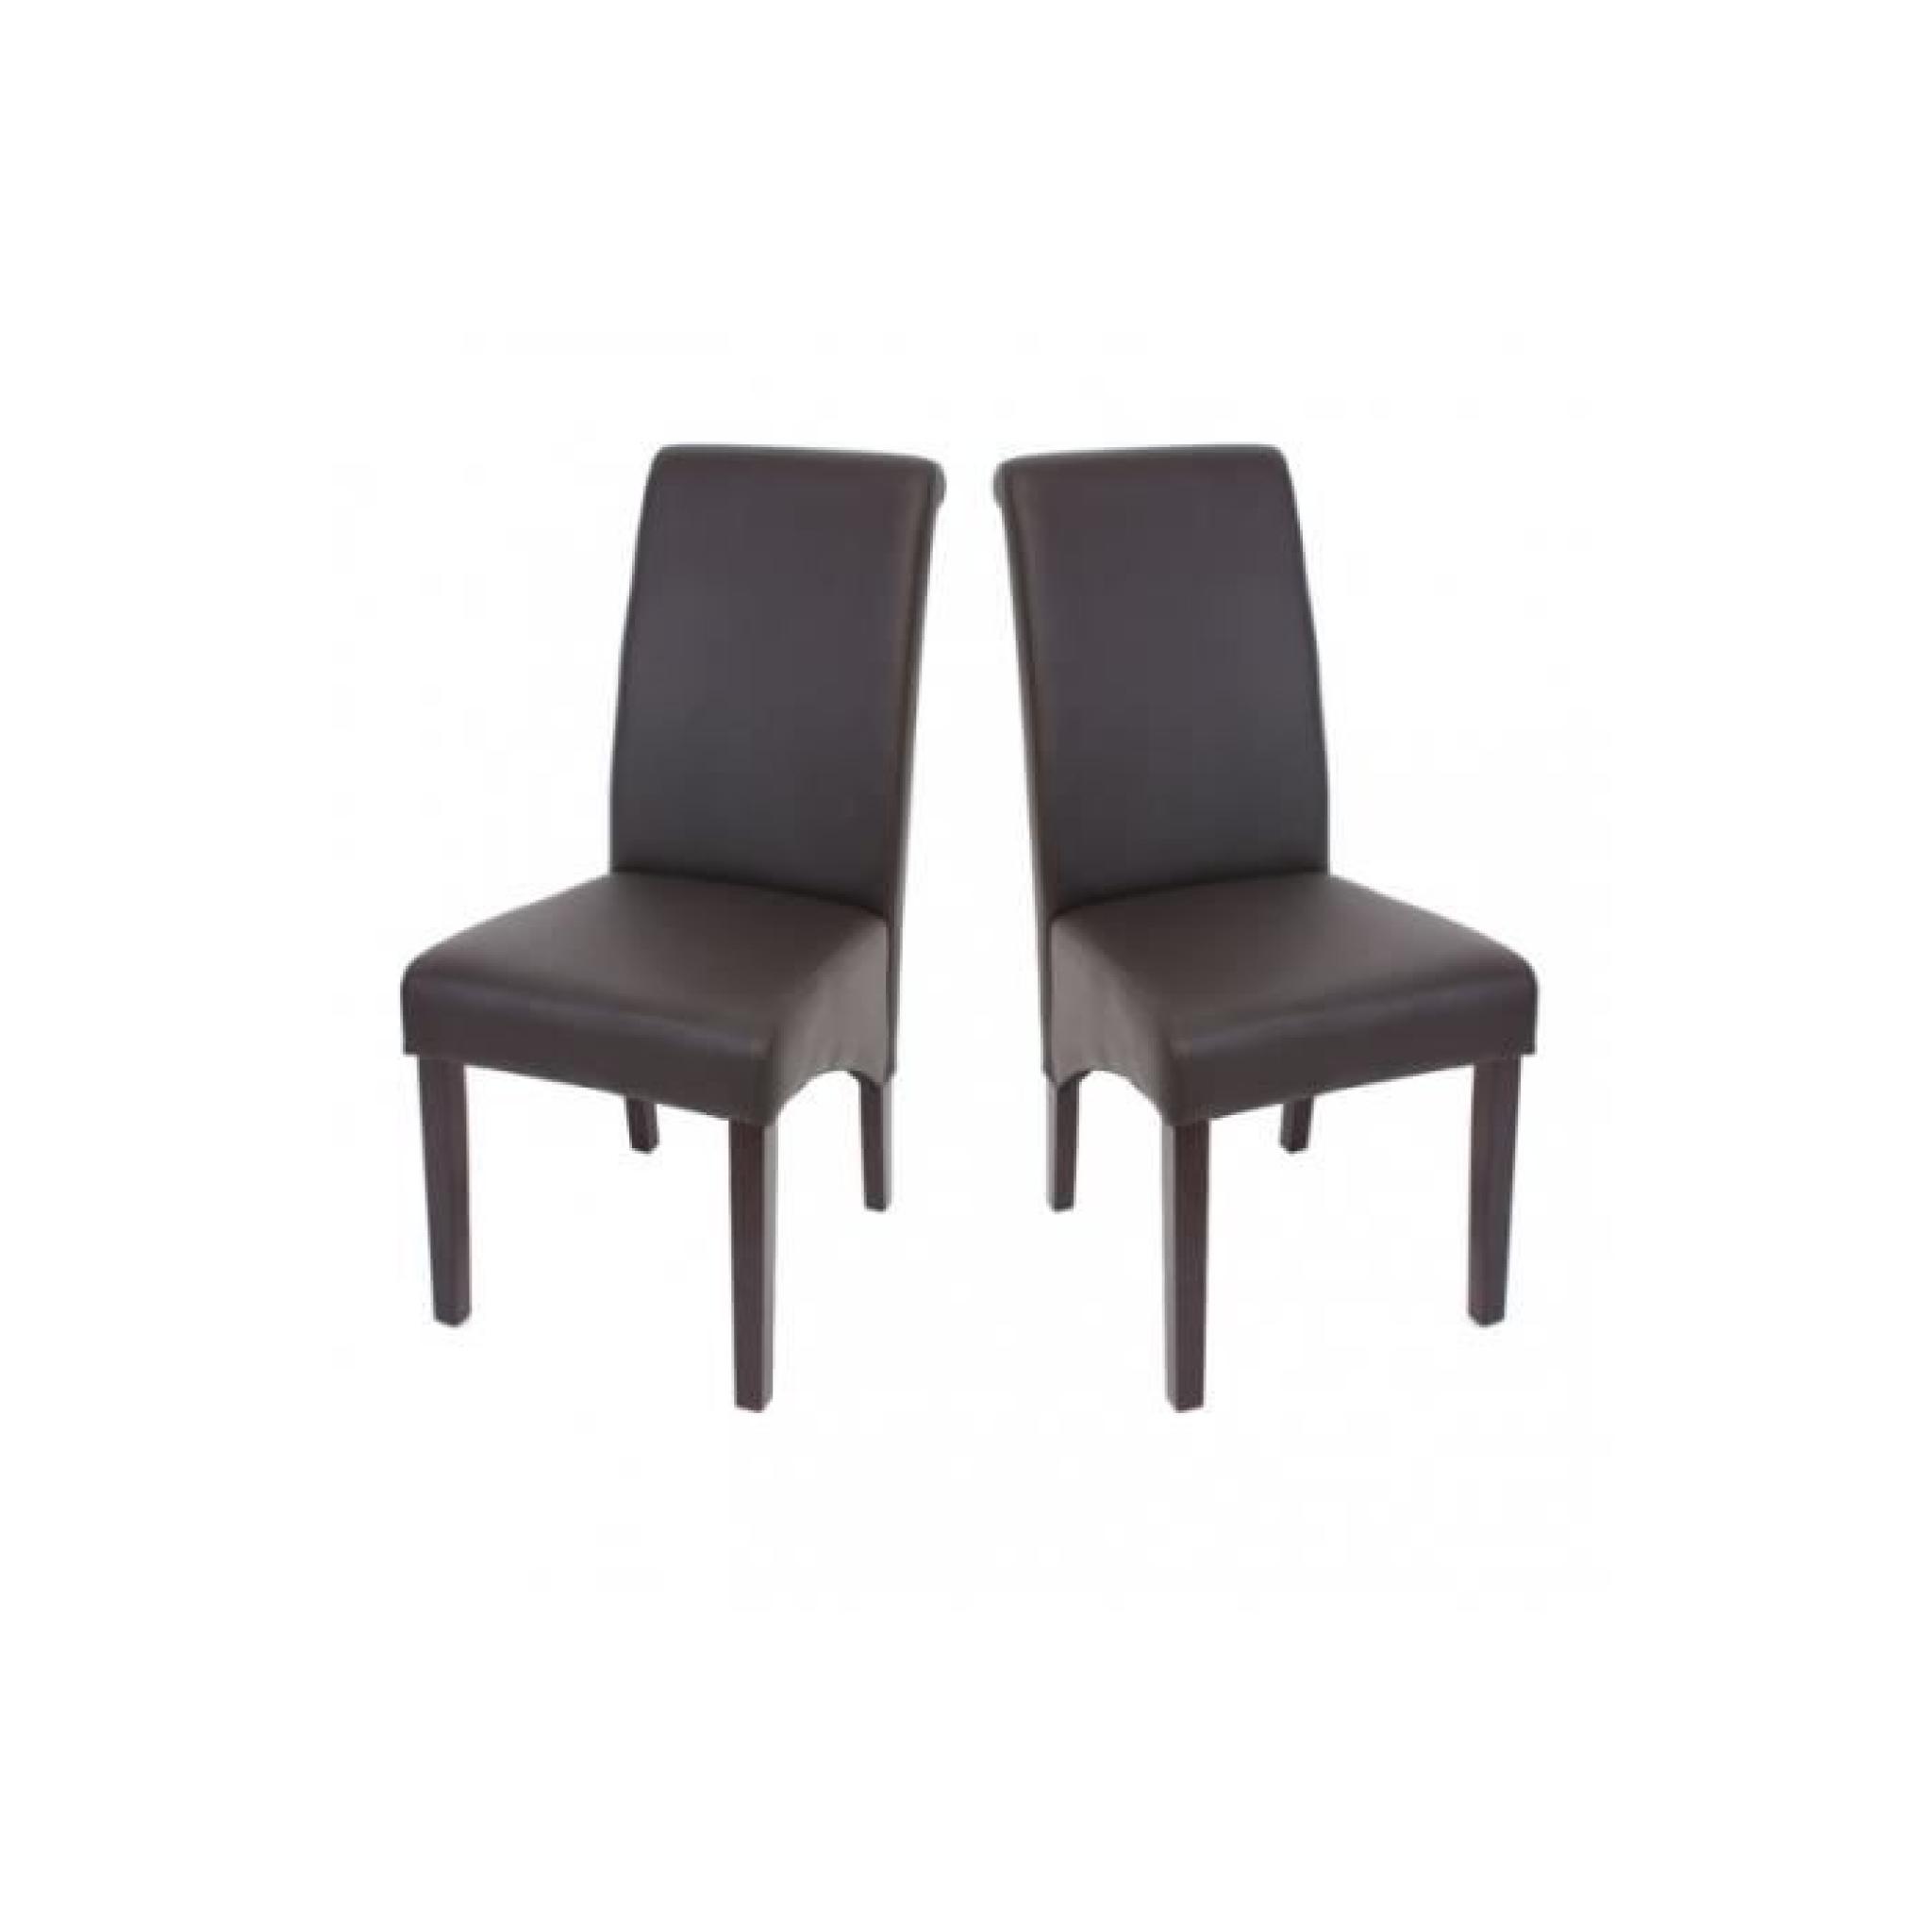  2x chaise inclinable en similicuir  ~ mat, brun, pieds noirs